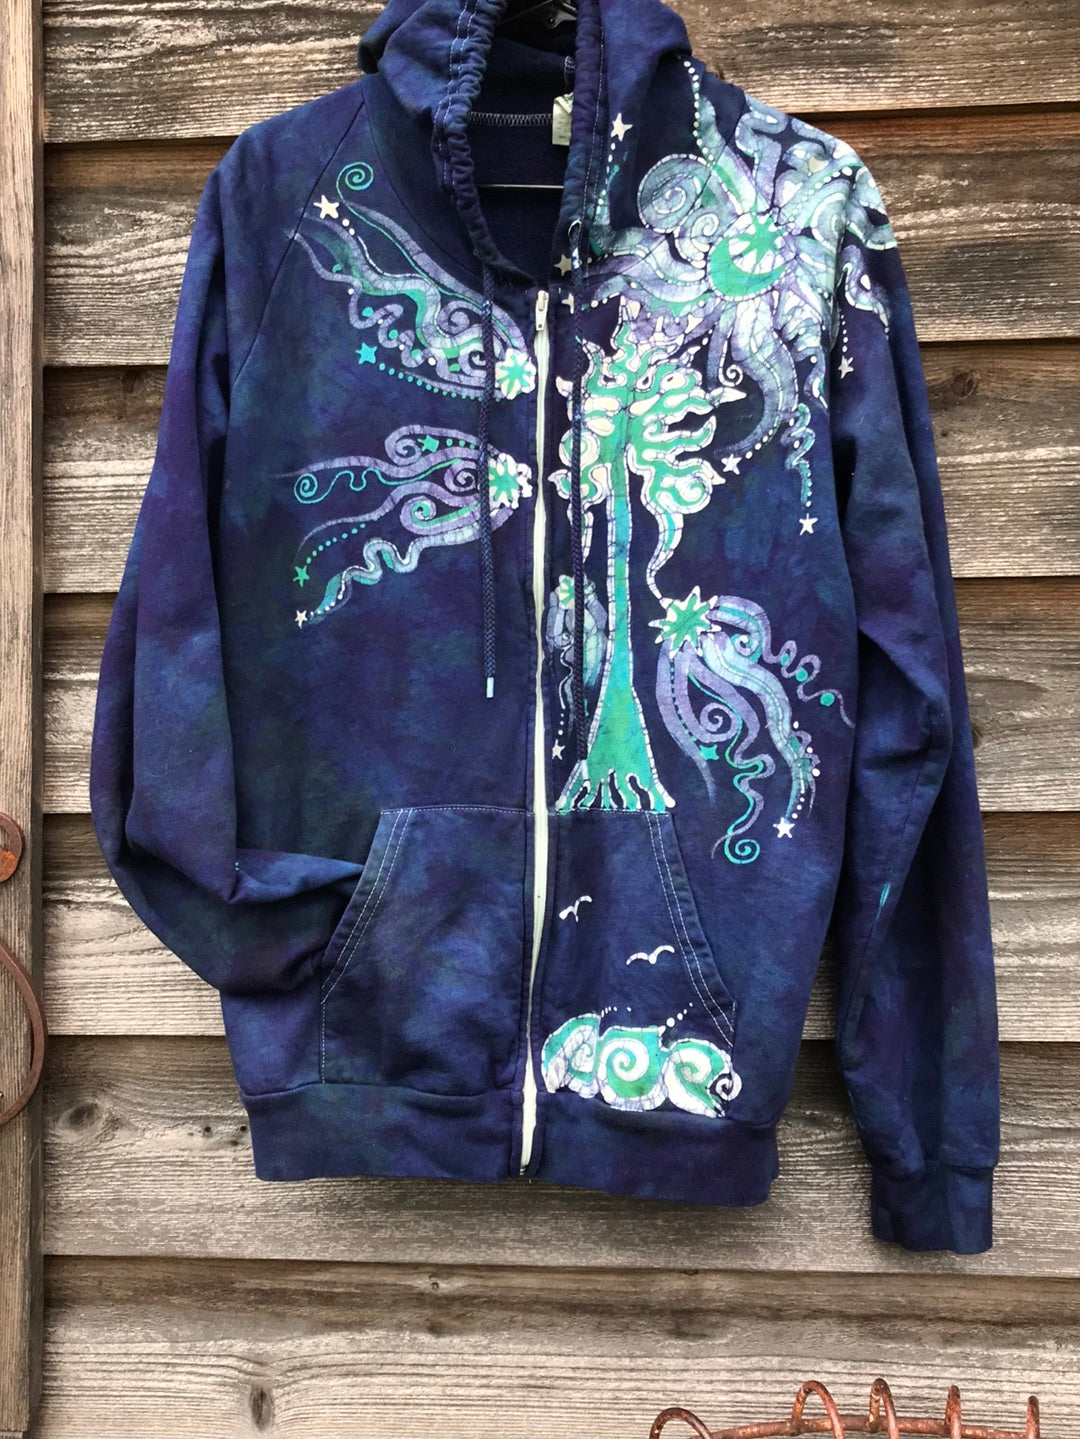 Reserved for Kris, Mystical Mist By The Sea Shore Handmade Batik Hoodie - Size Large hoodie batikwalla 